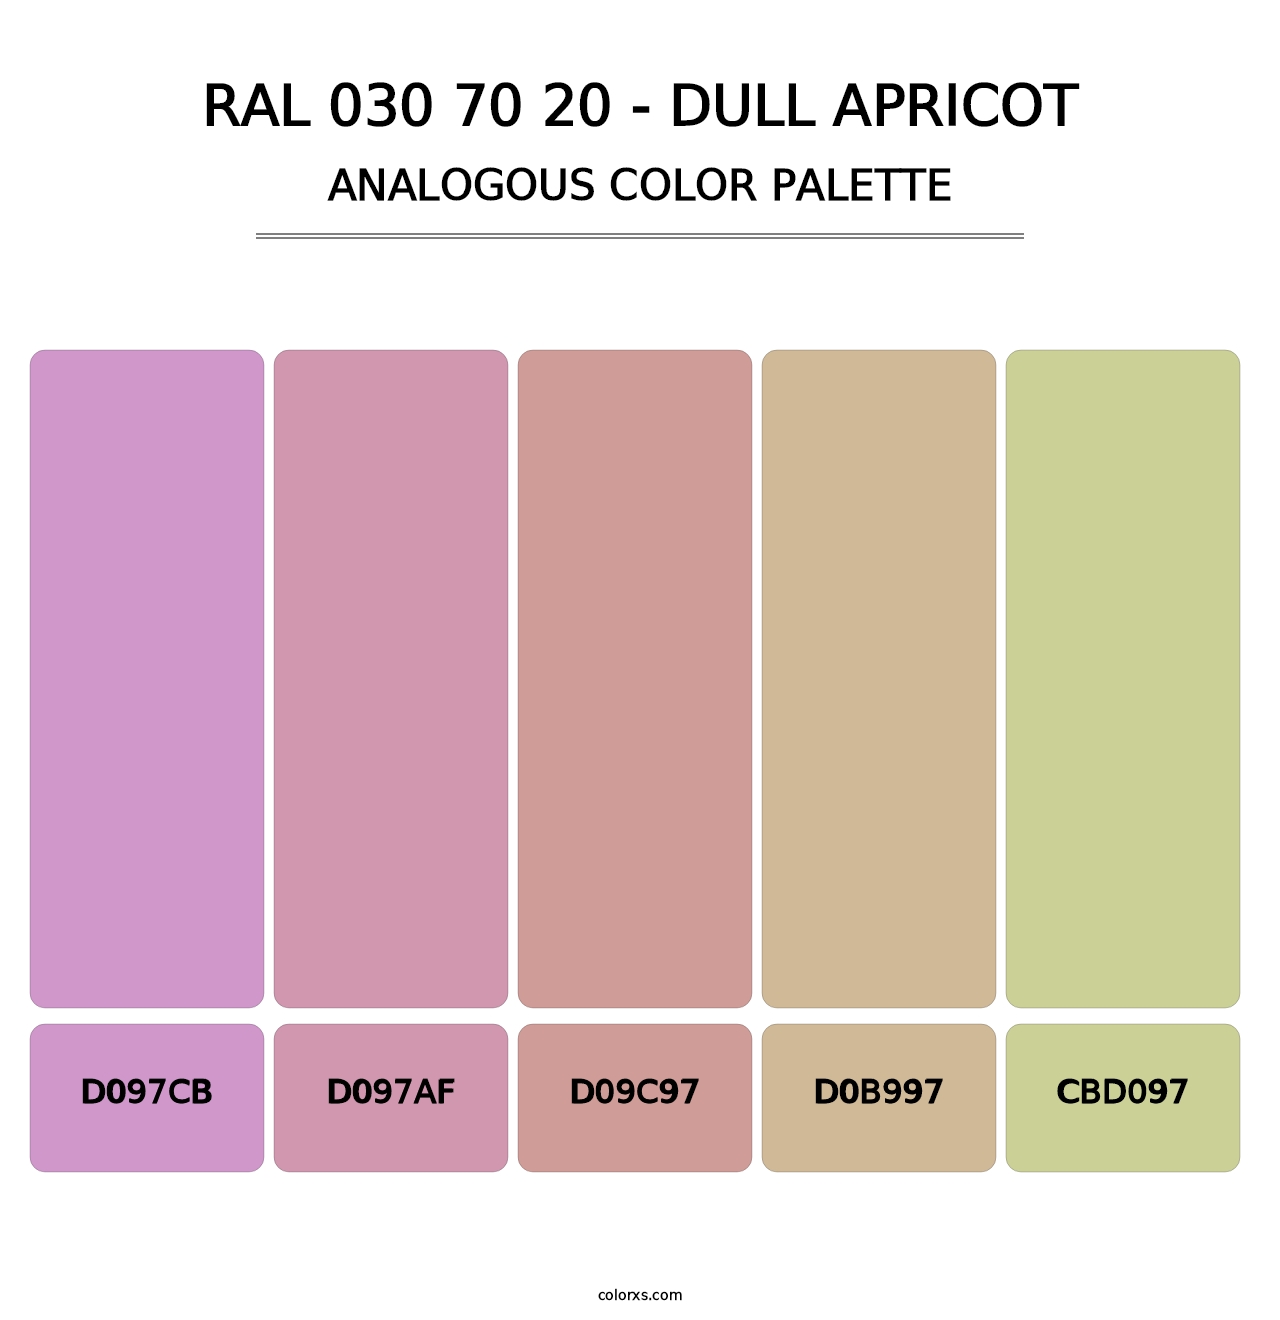 RAL 030 70 20 - Dull Apricot - Analogous Color Palette